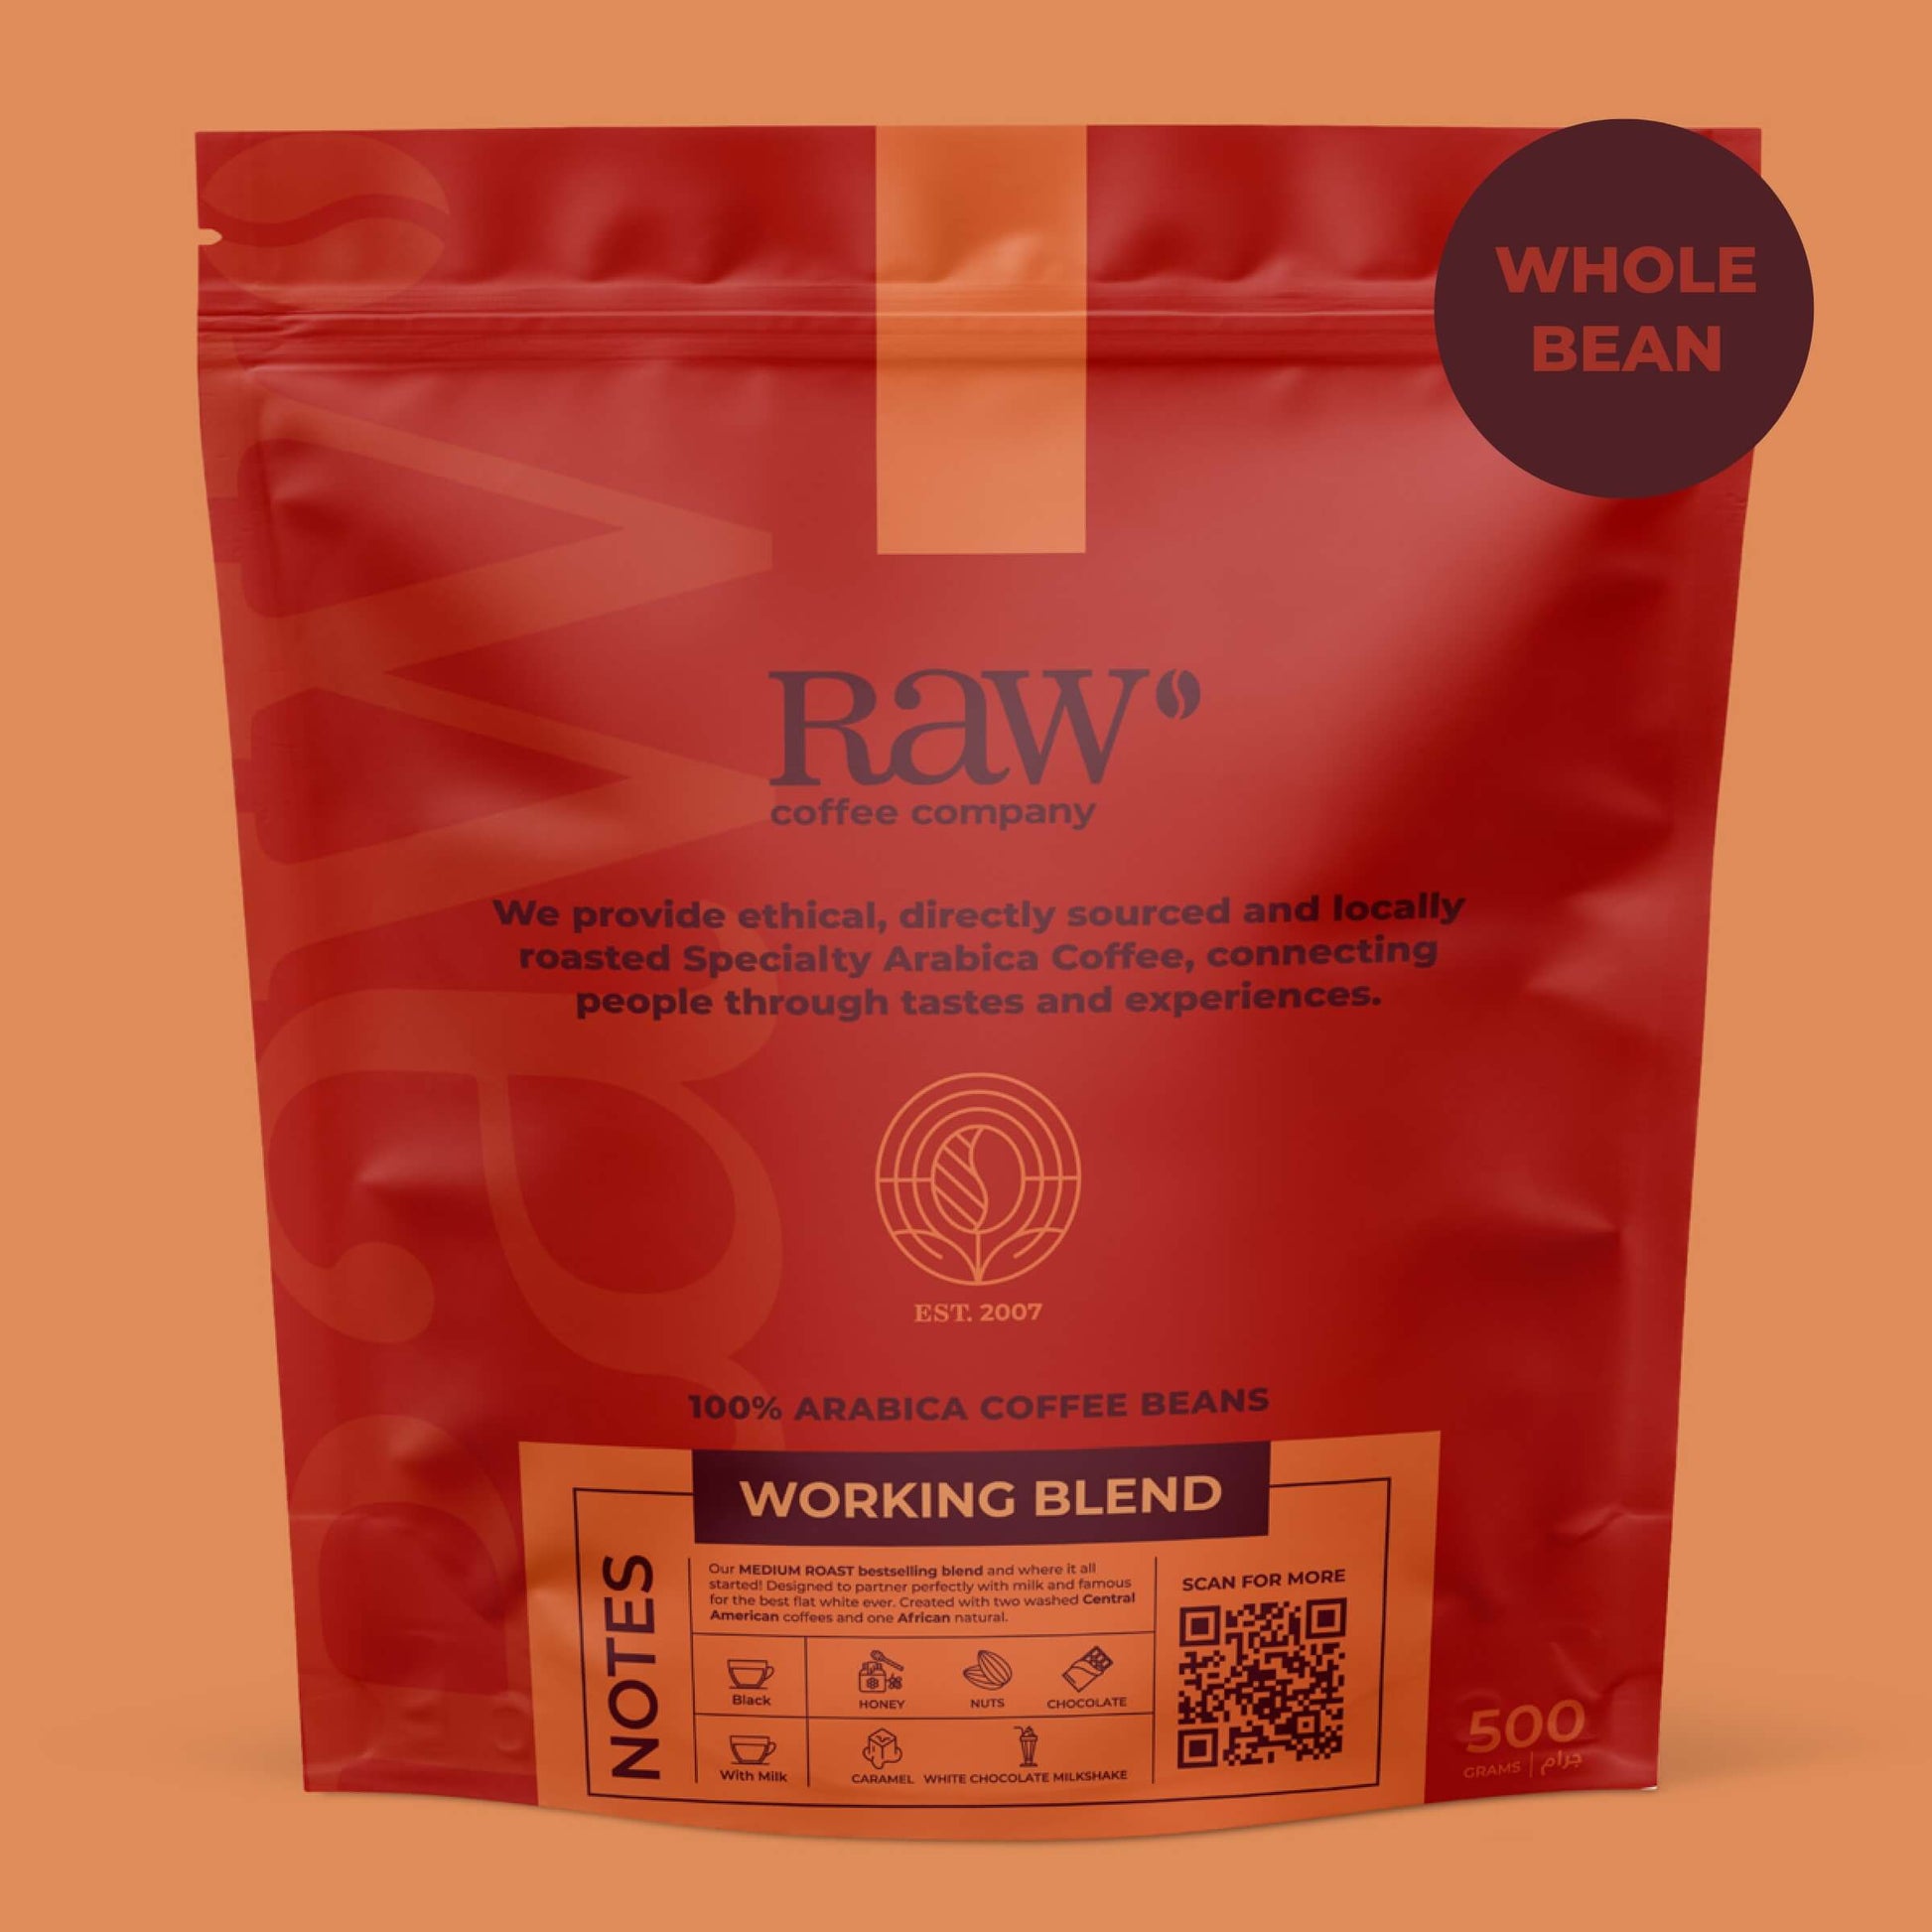 Working-Blend-Coffee-500gm-Whole-Bean_RAW-Coffee-Company